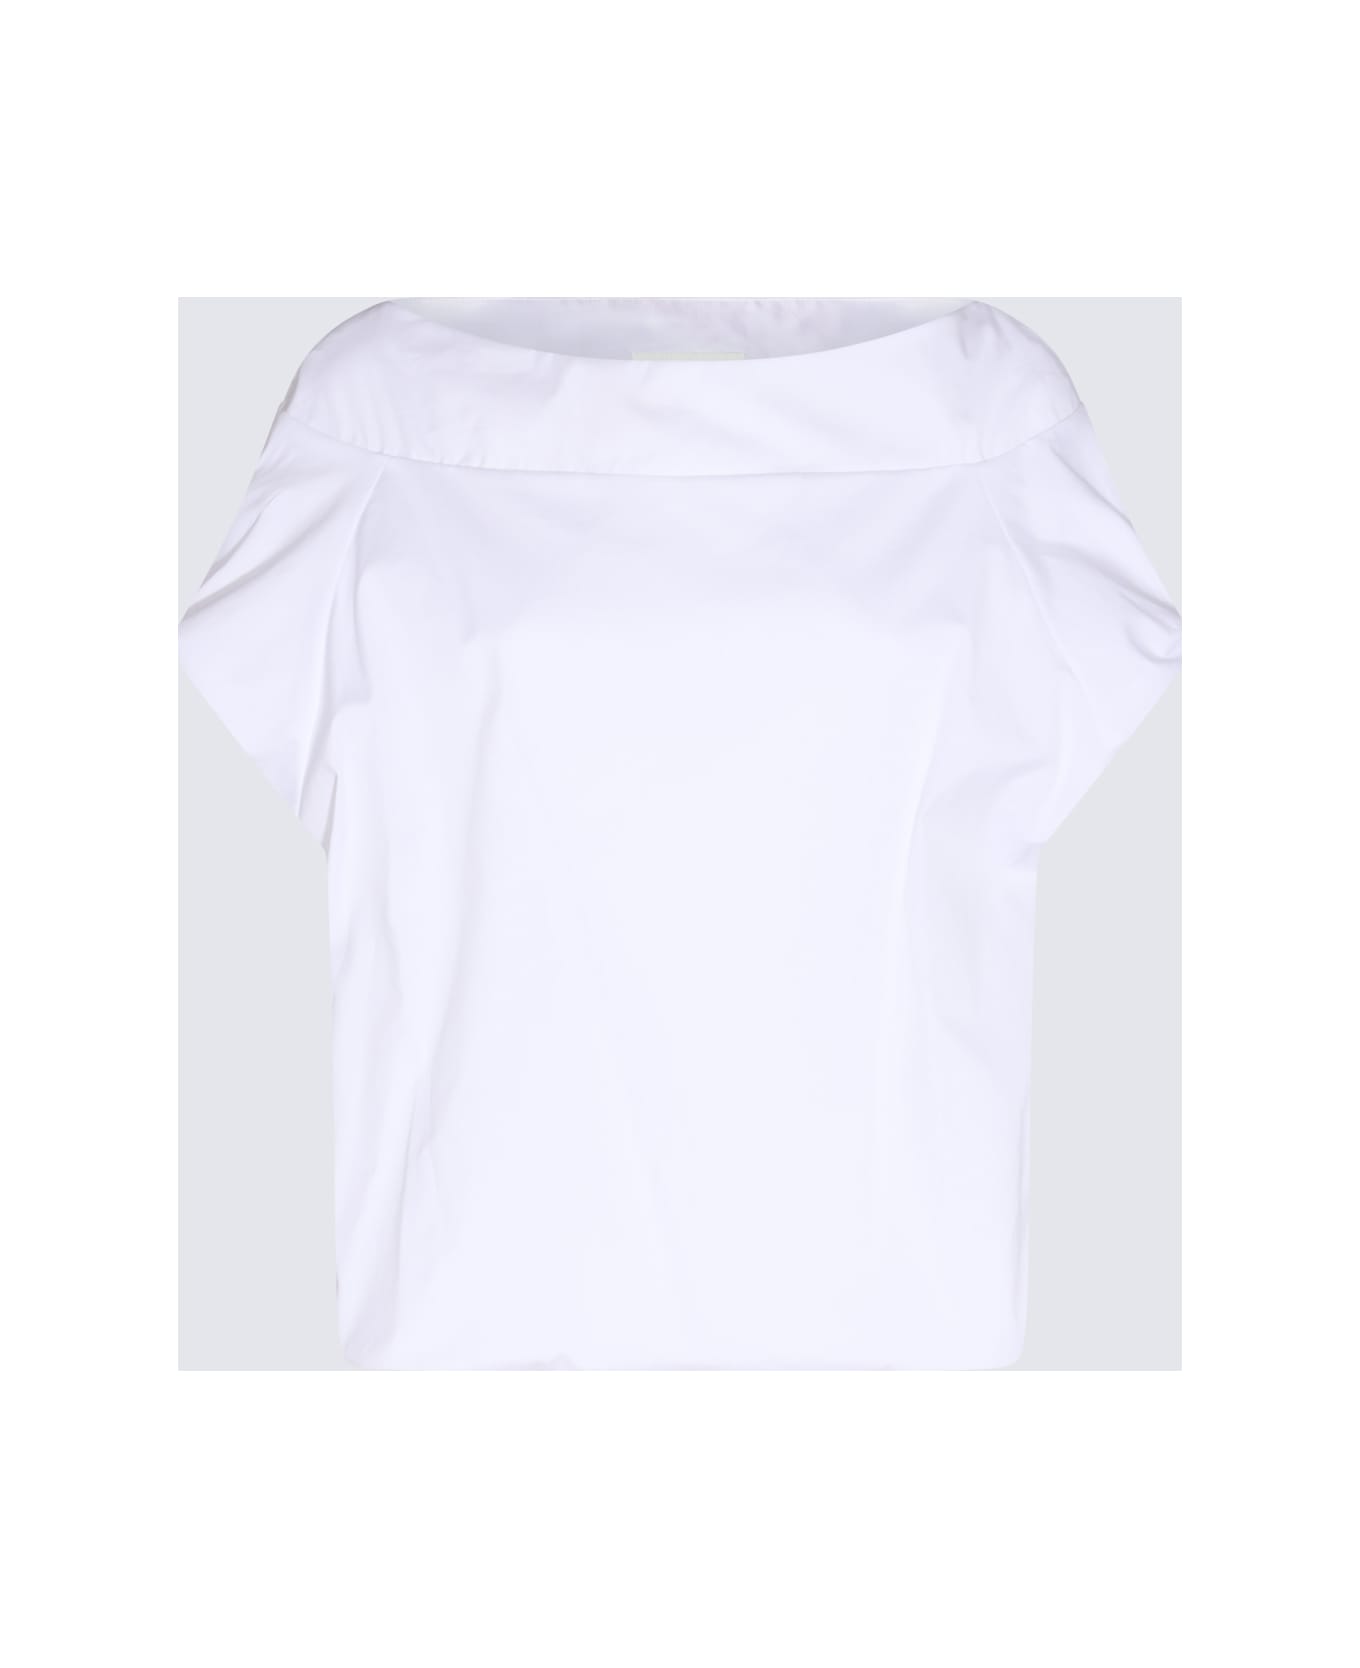 Dries Van Noten White Cotton Shirt - White